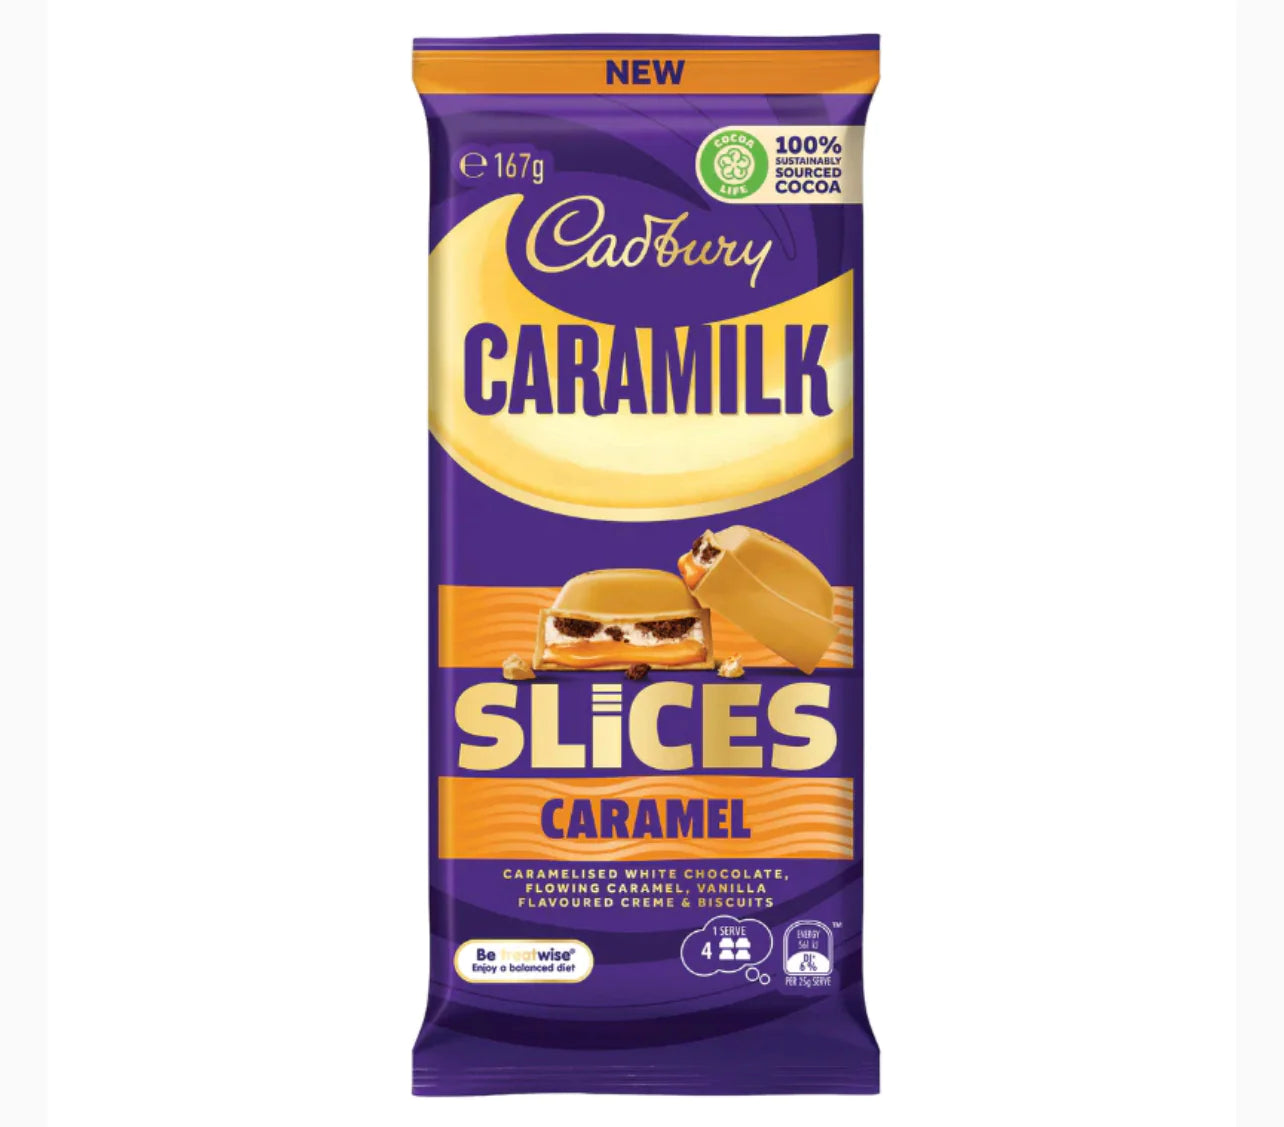 Cadbury's Caramilk Slices Caramel (165g)